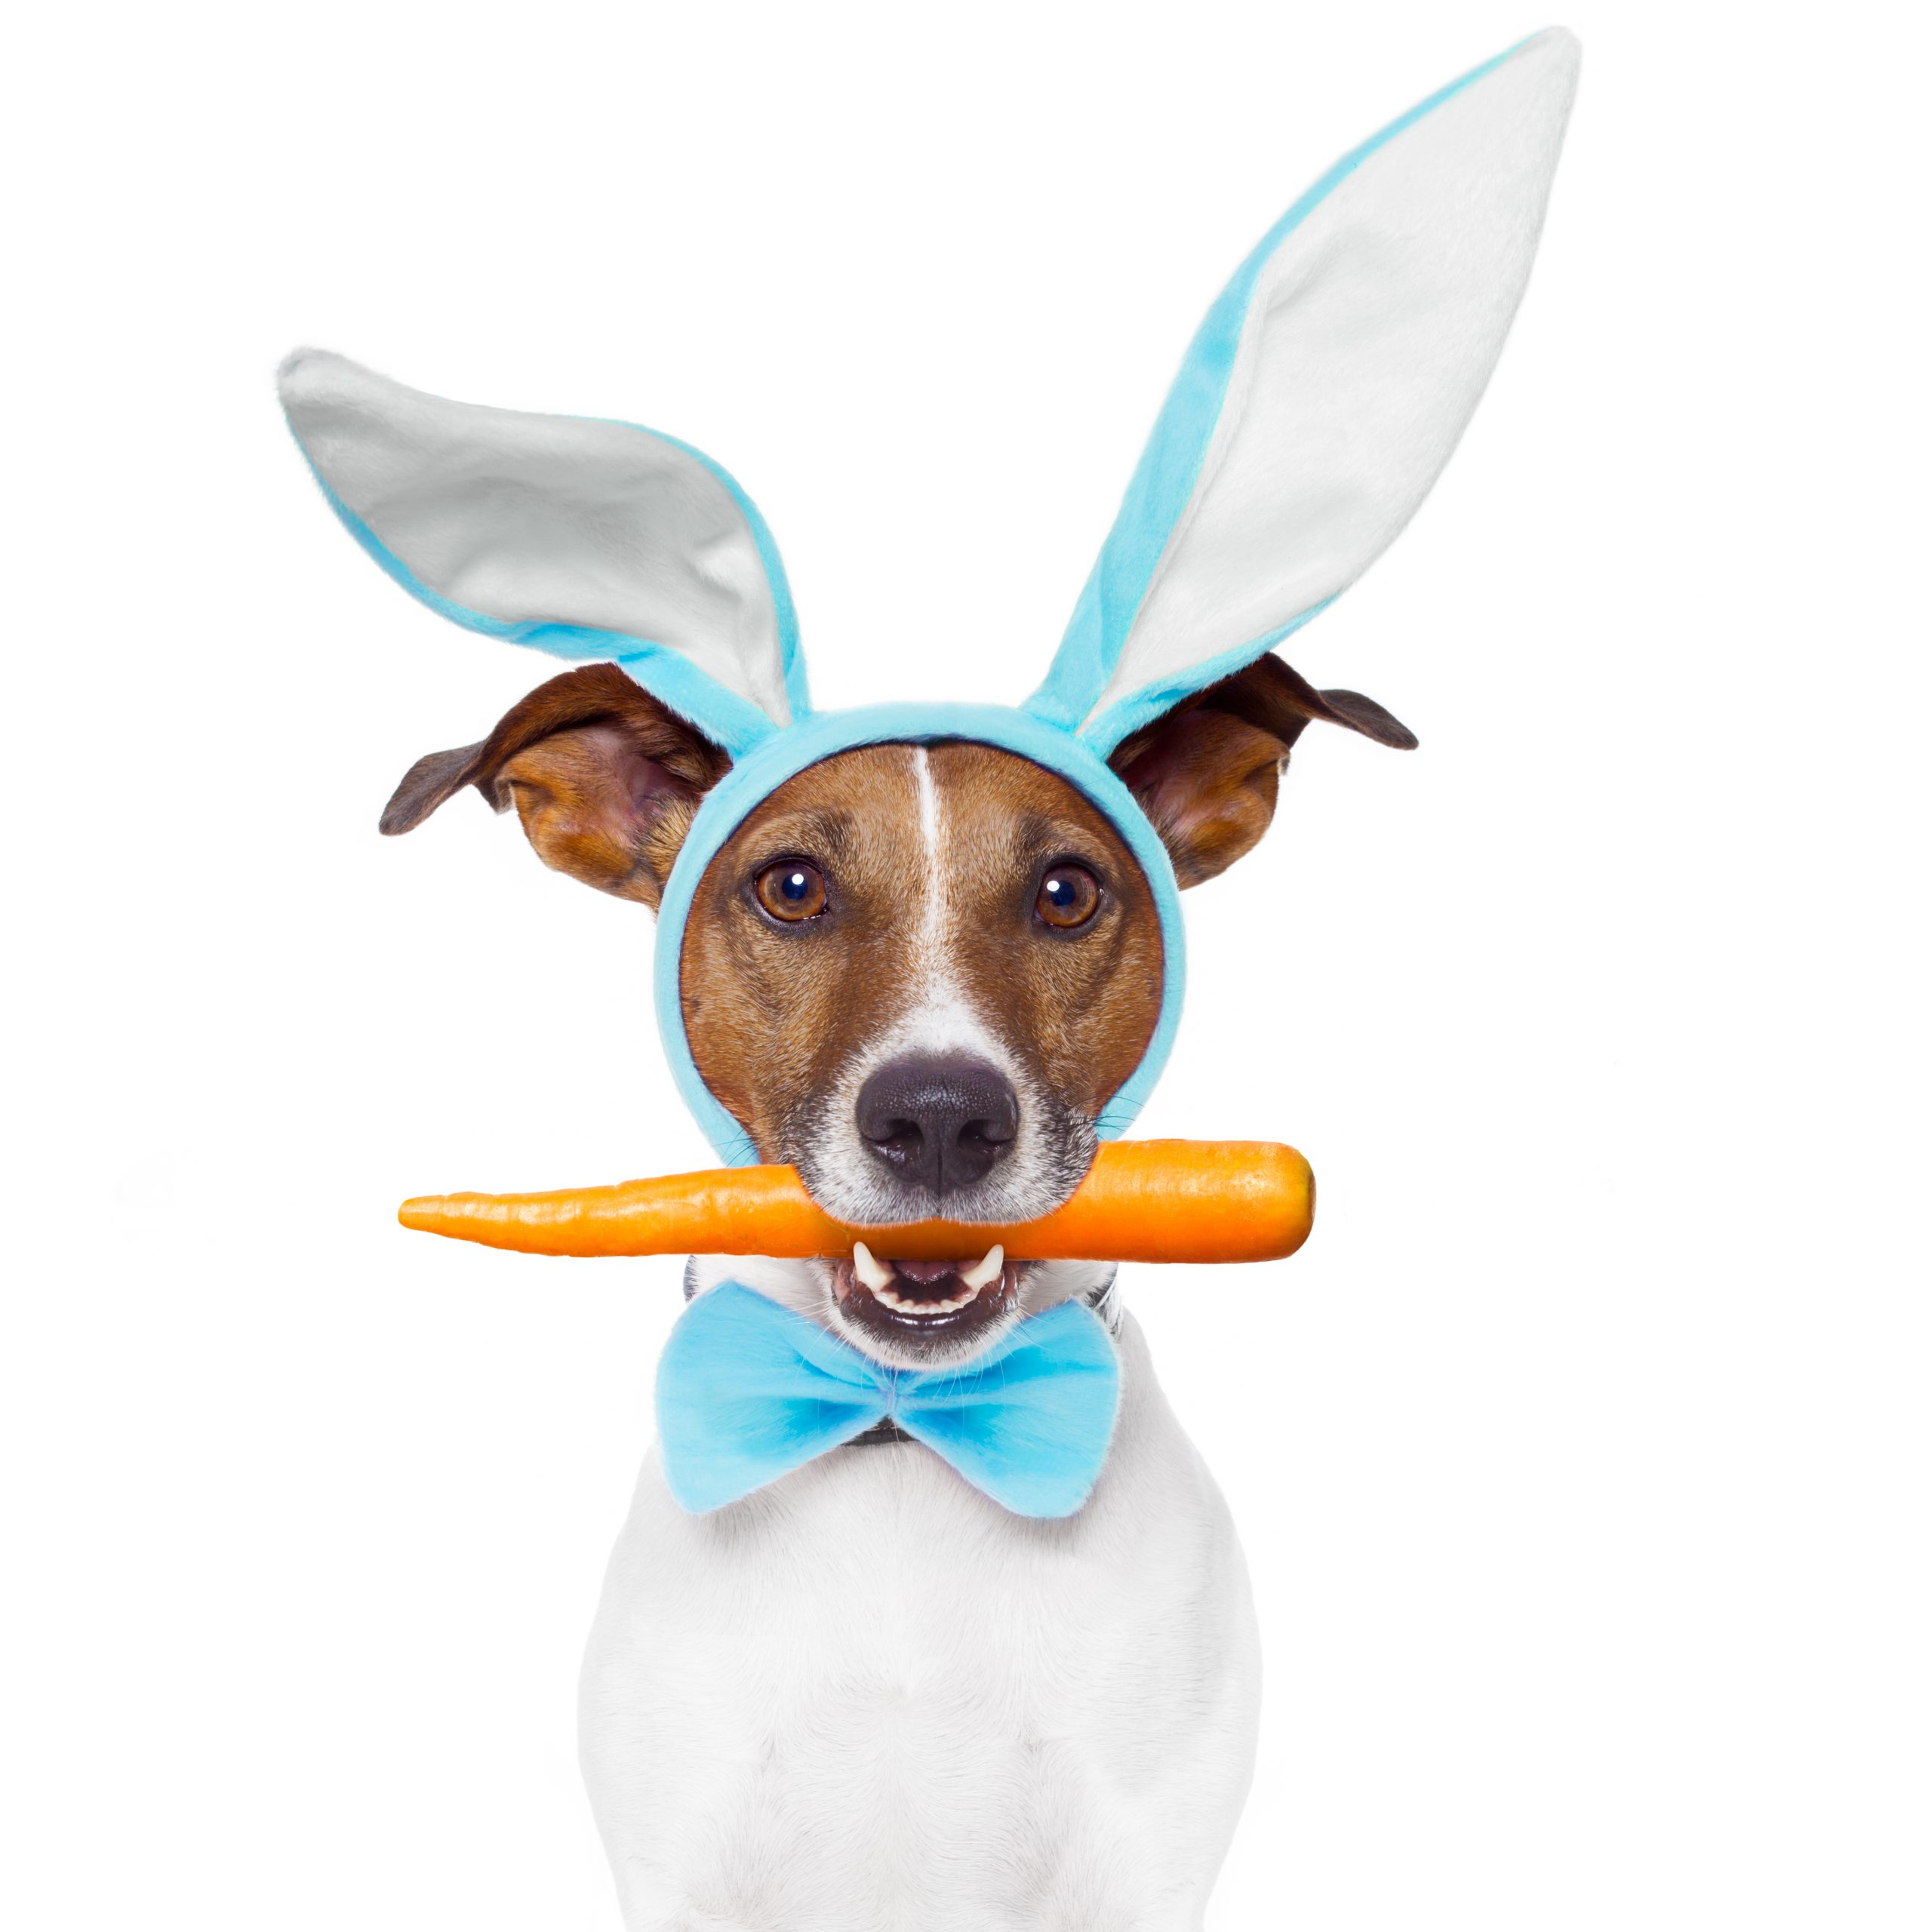 https://depositphotos.com/9681152/stock-photo-dog-with-bunny-ears-and.html